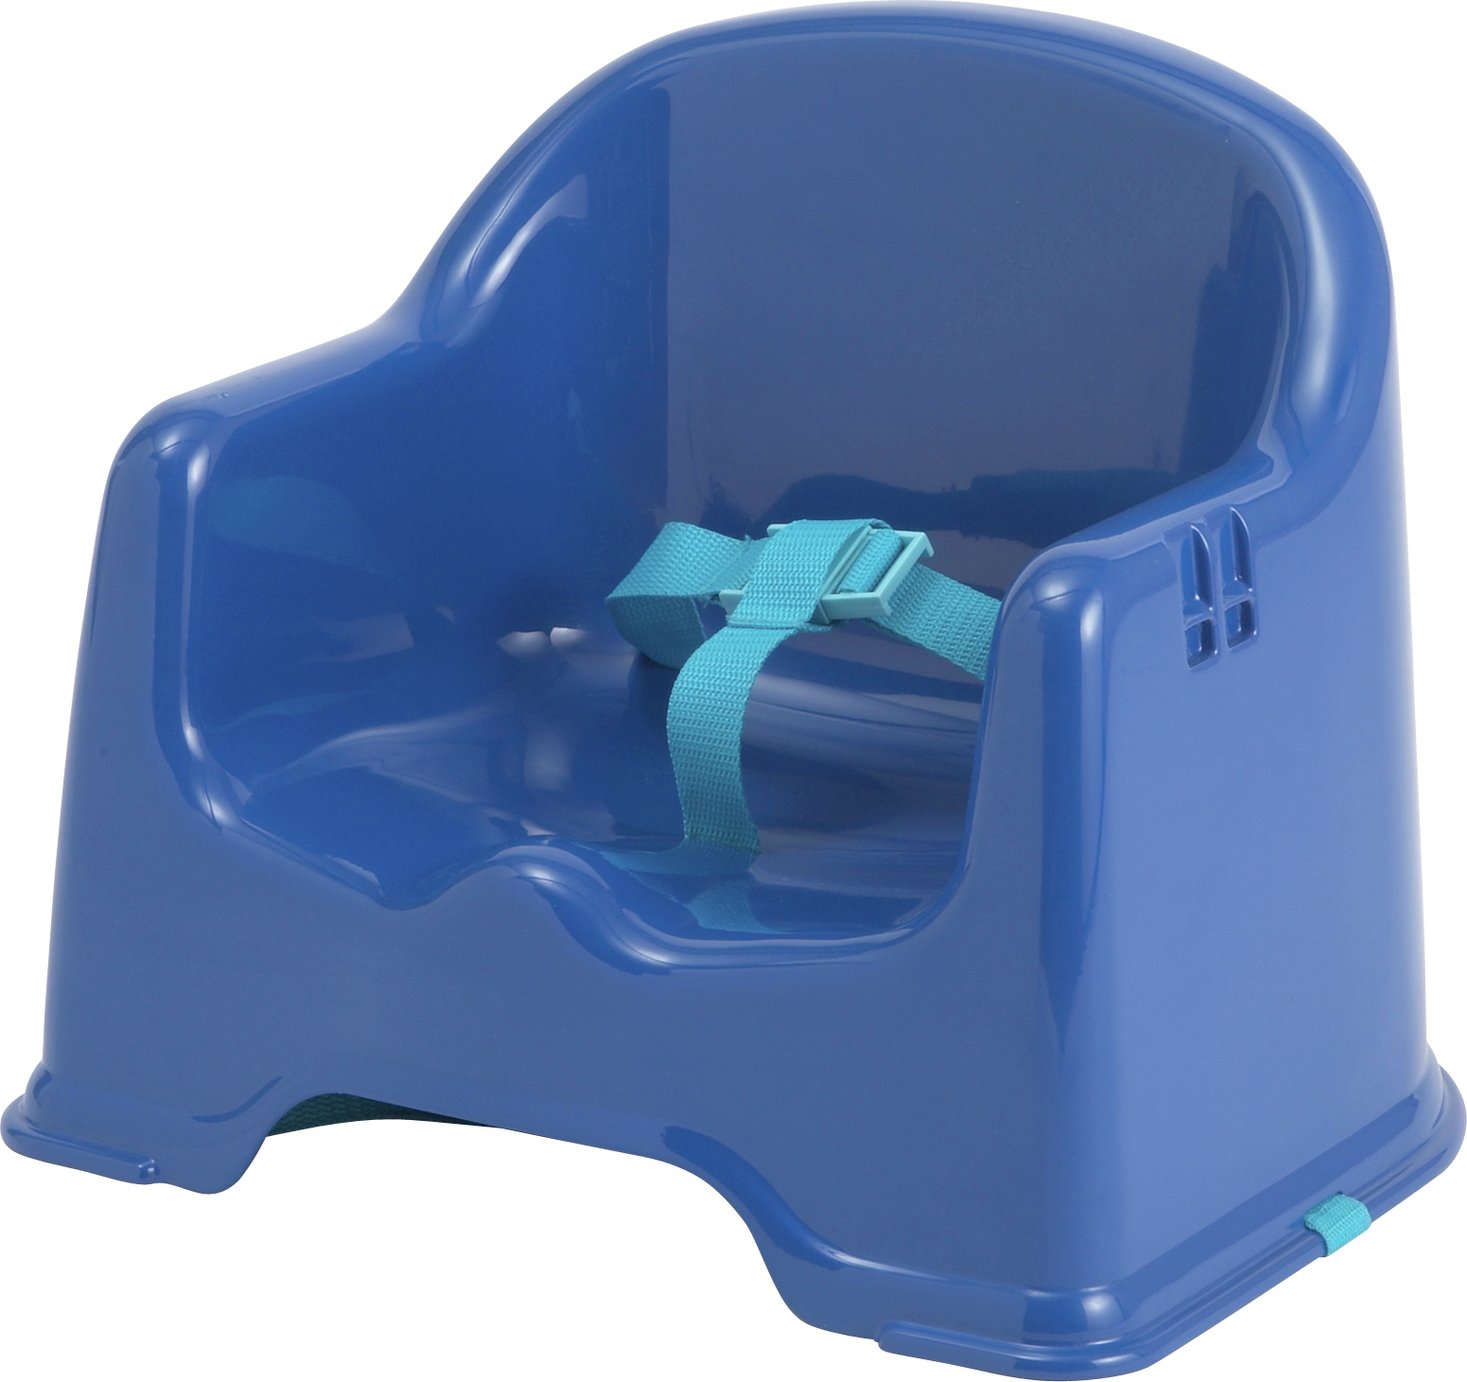 Little Star Chair Booster Seat - Blue